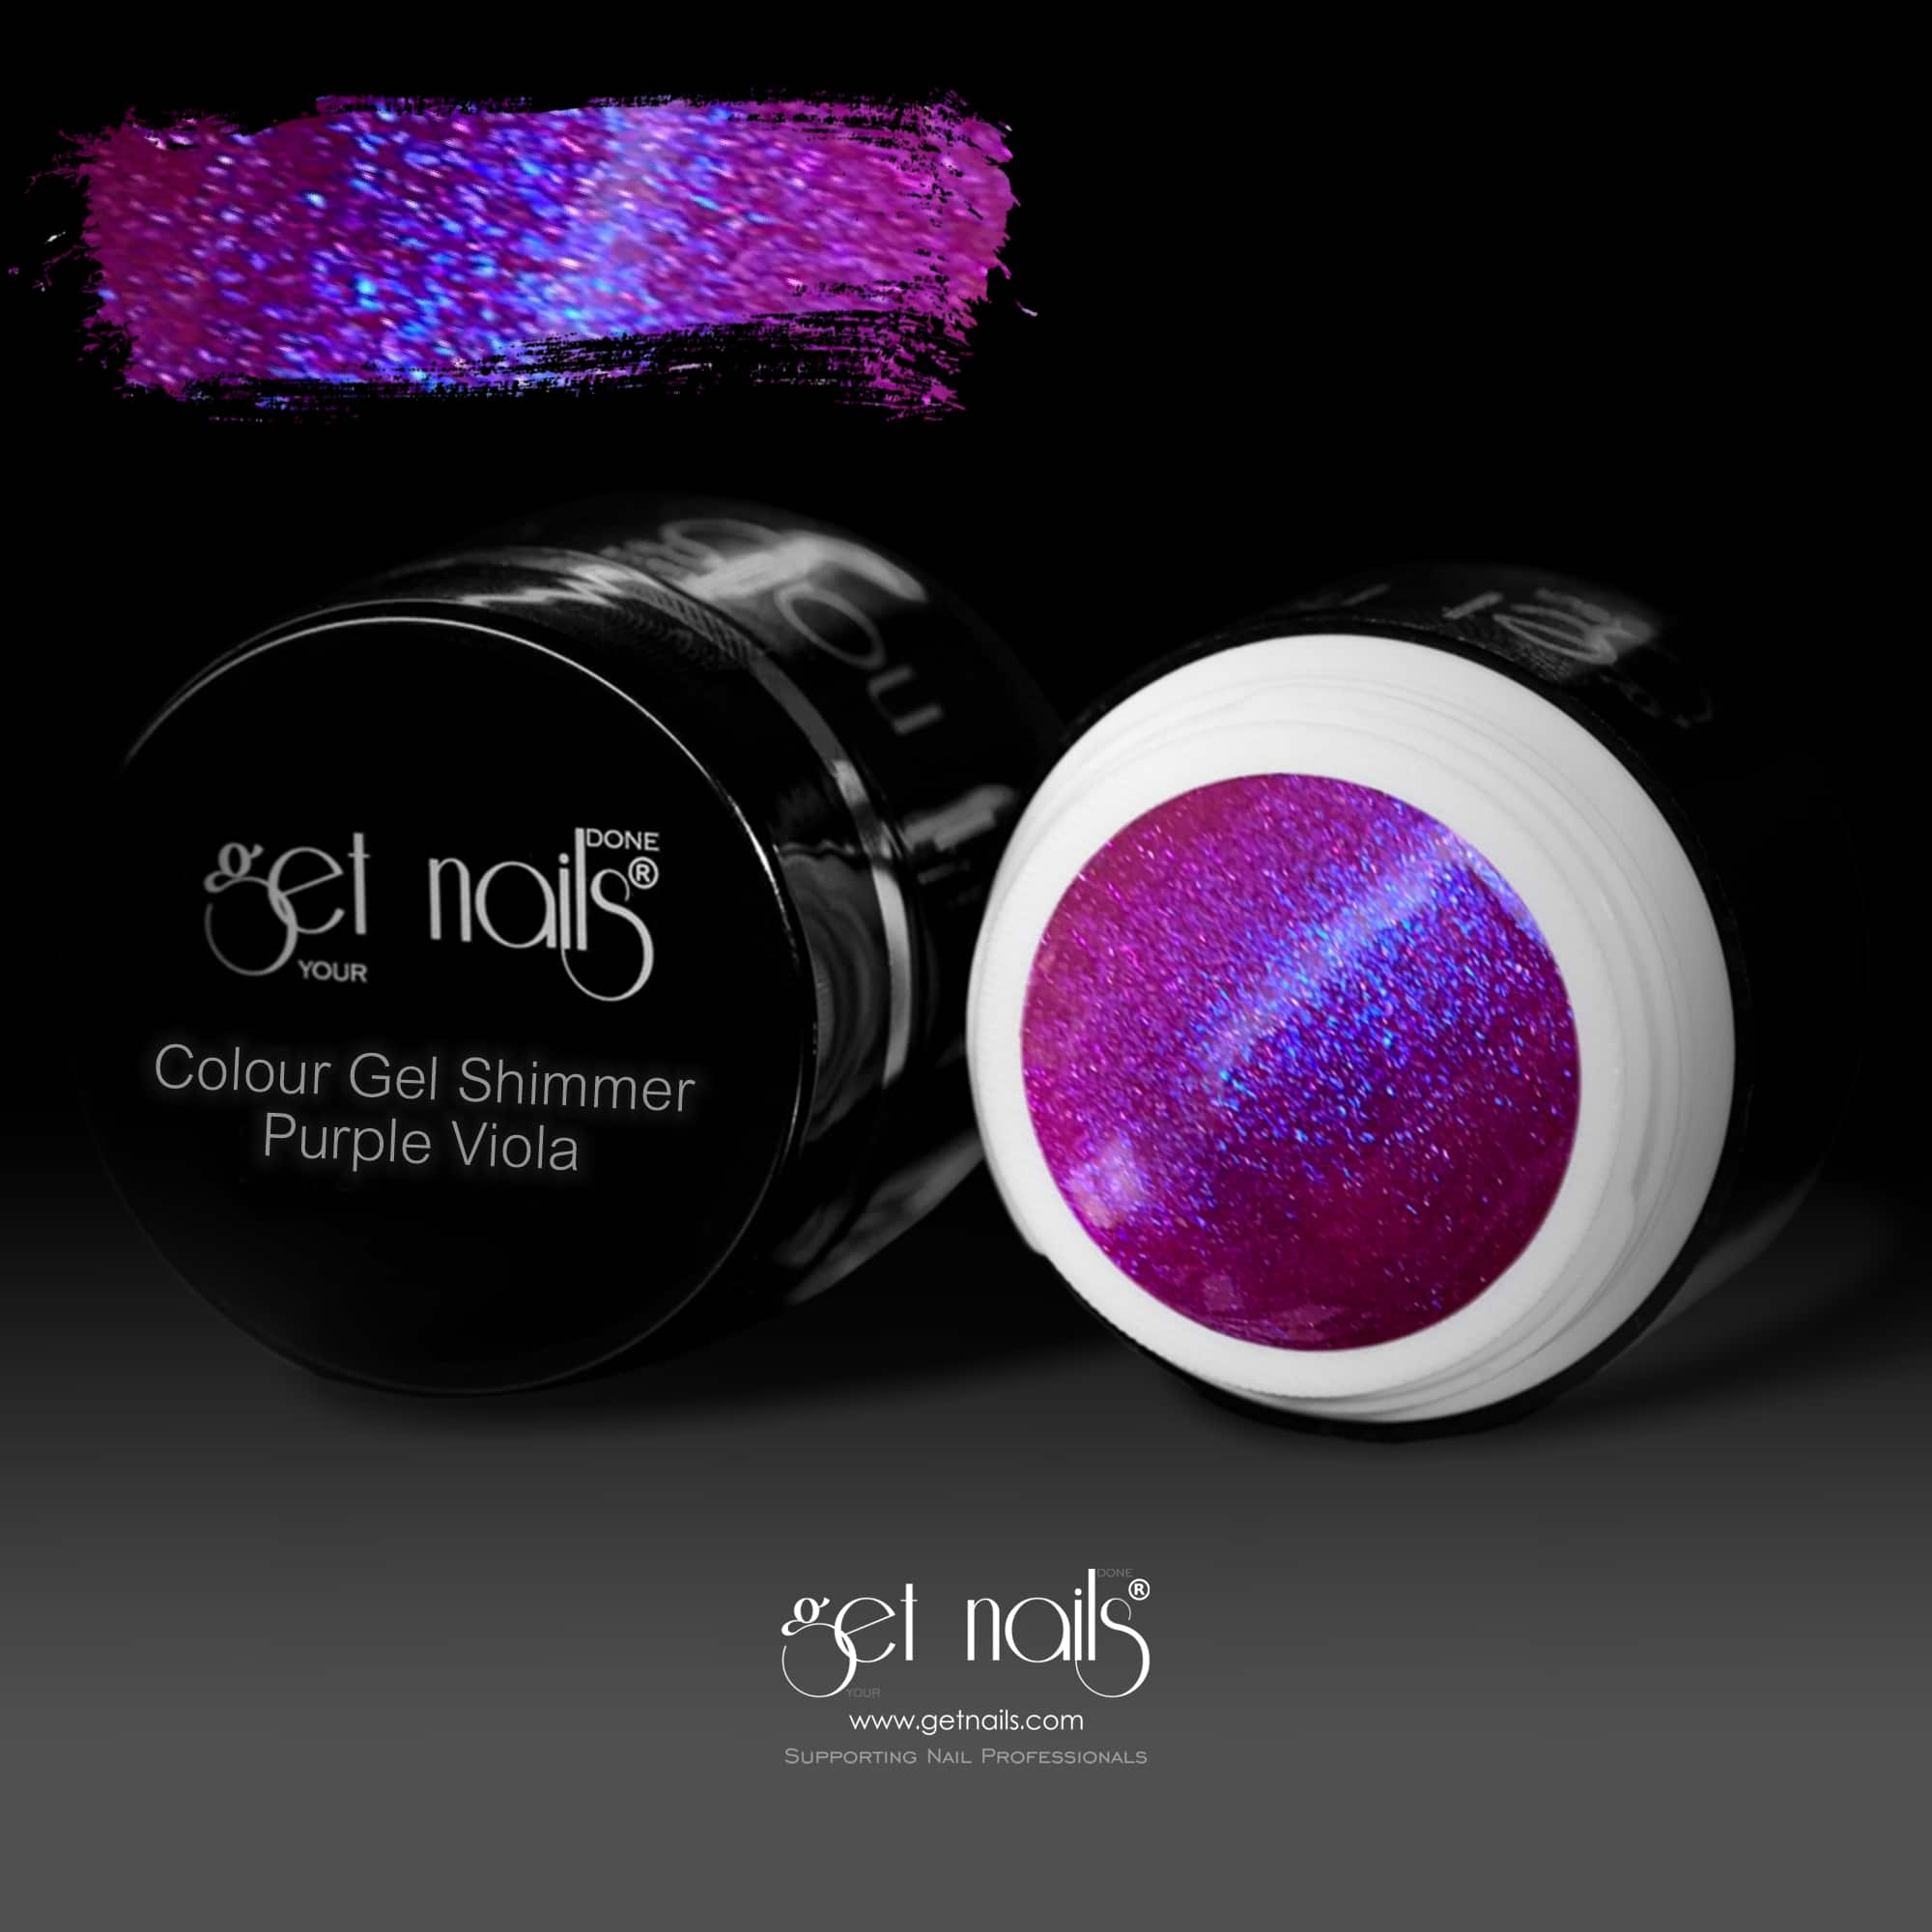 Get Nails Austria - Colour Gel Shimmer Purple Viola 5g